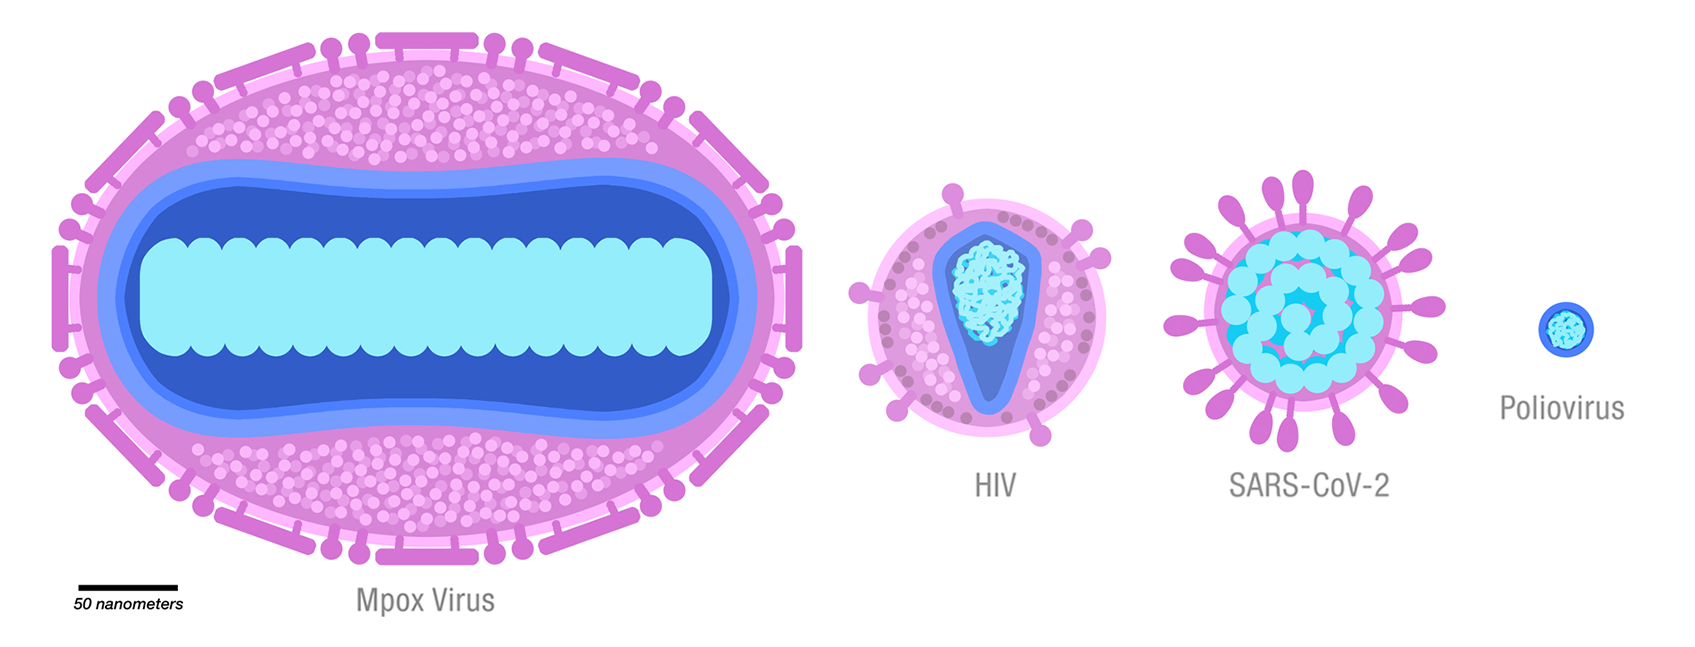 Schematic illustration of monkeypox virus, HIV, SARS-CoV-2, and polovirus drawn to scale.